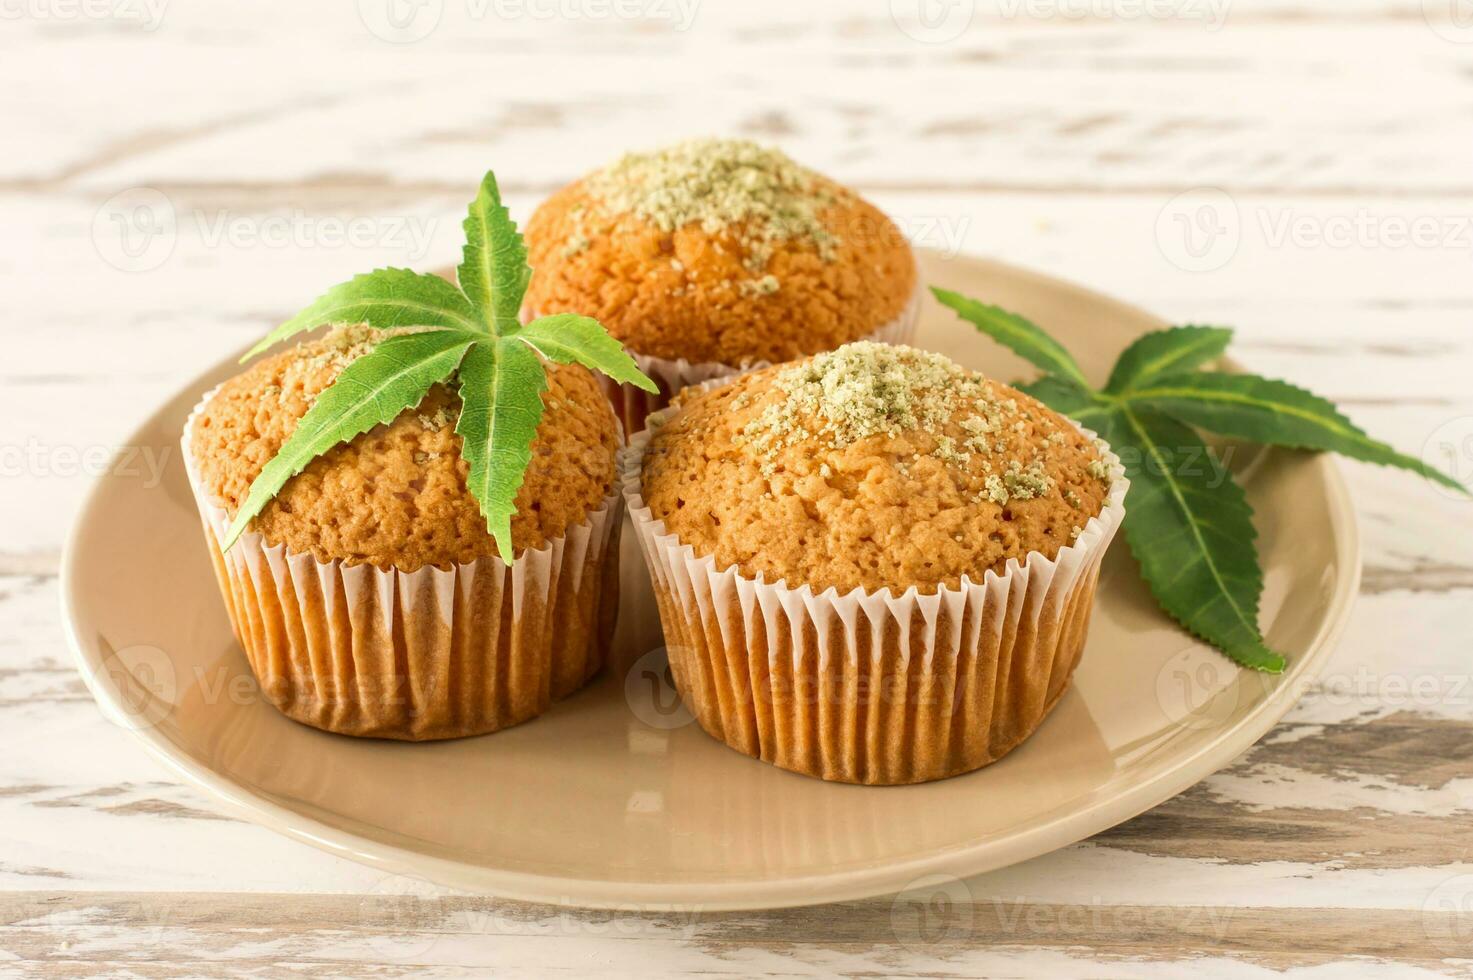 Cupcake with marijuana. Tasty cupcake muffins with cannabis weed cbd. Medical marijuana drugs in food dessert, ganja legalization. photo